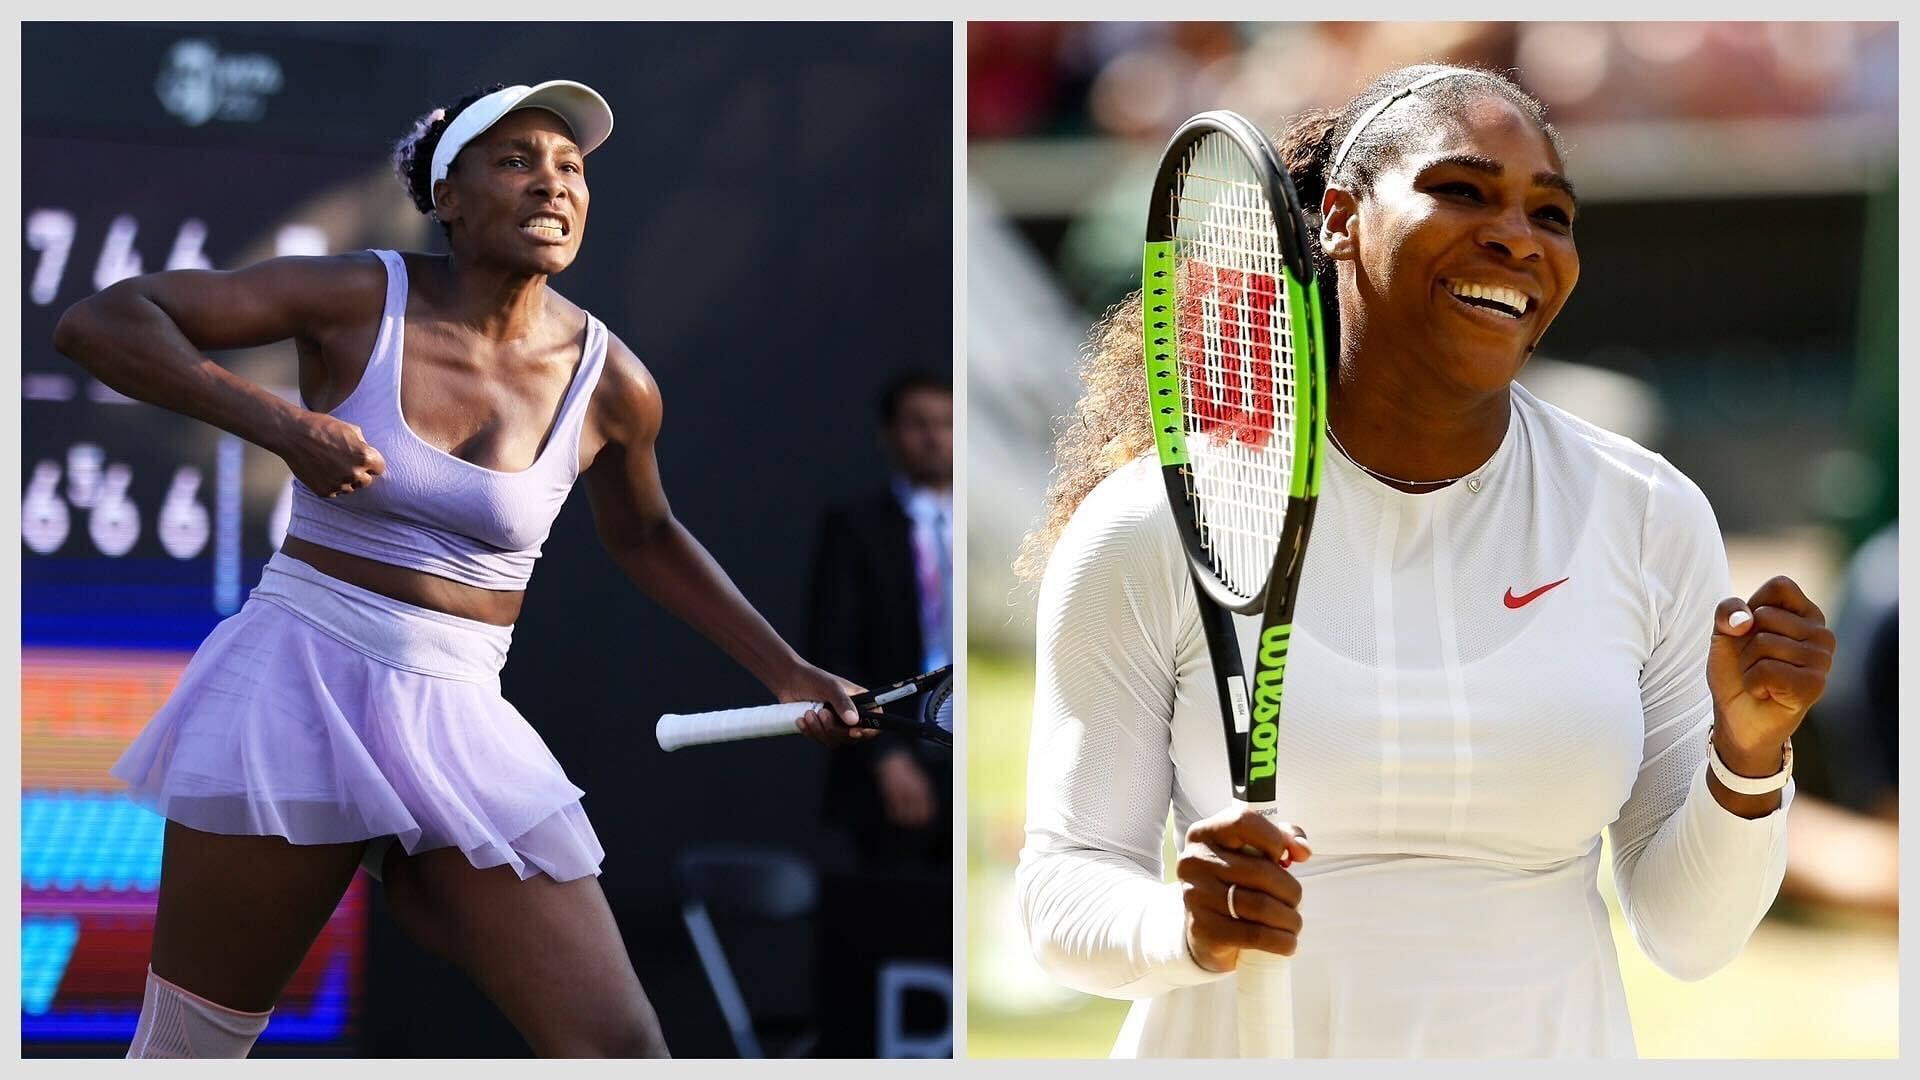 Venus Williams (L) and Serena Williams (R)